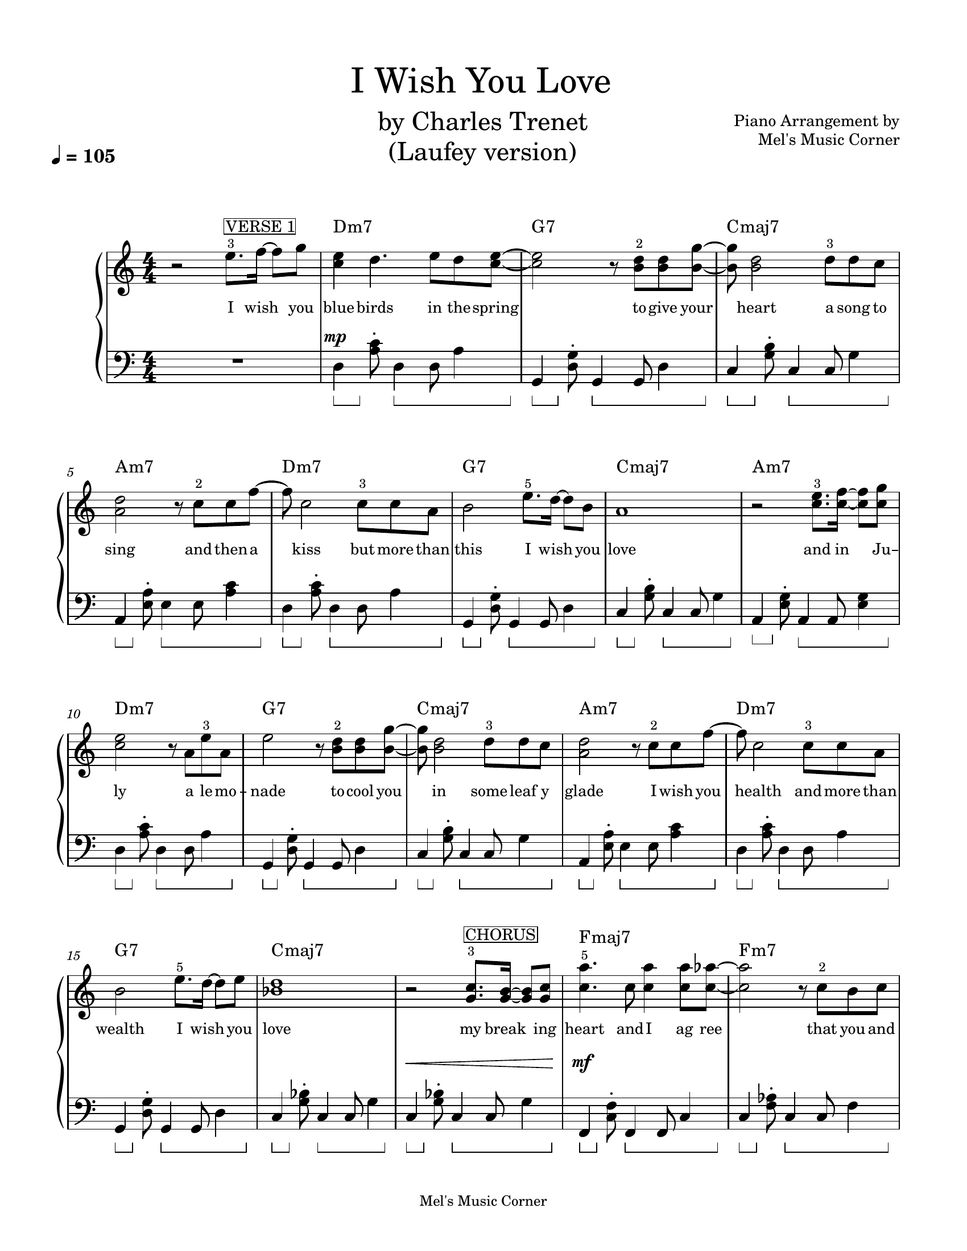 Charles Trenet - I Wish You Love - Laufey version (piano sheet music) by Mel's Music Corner